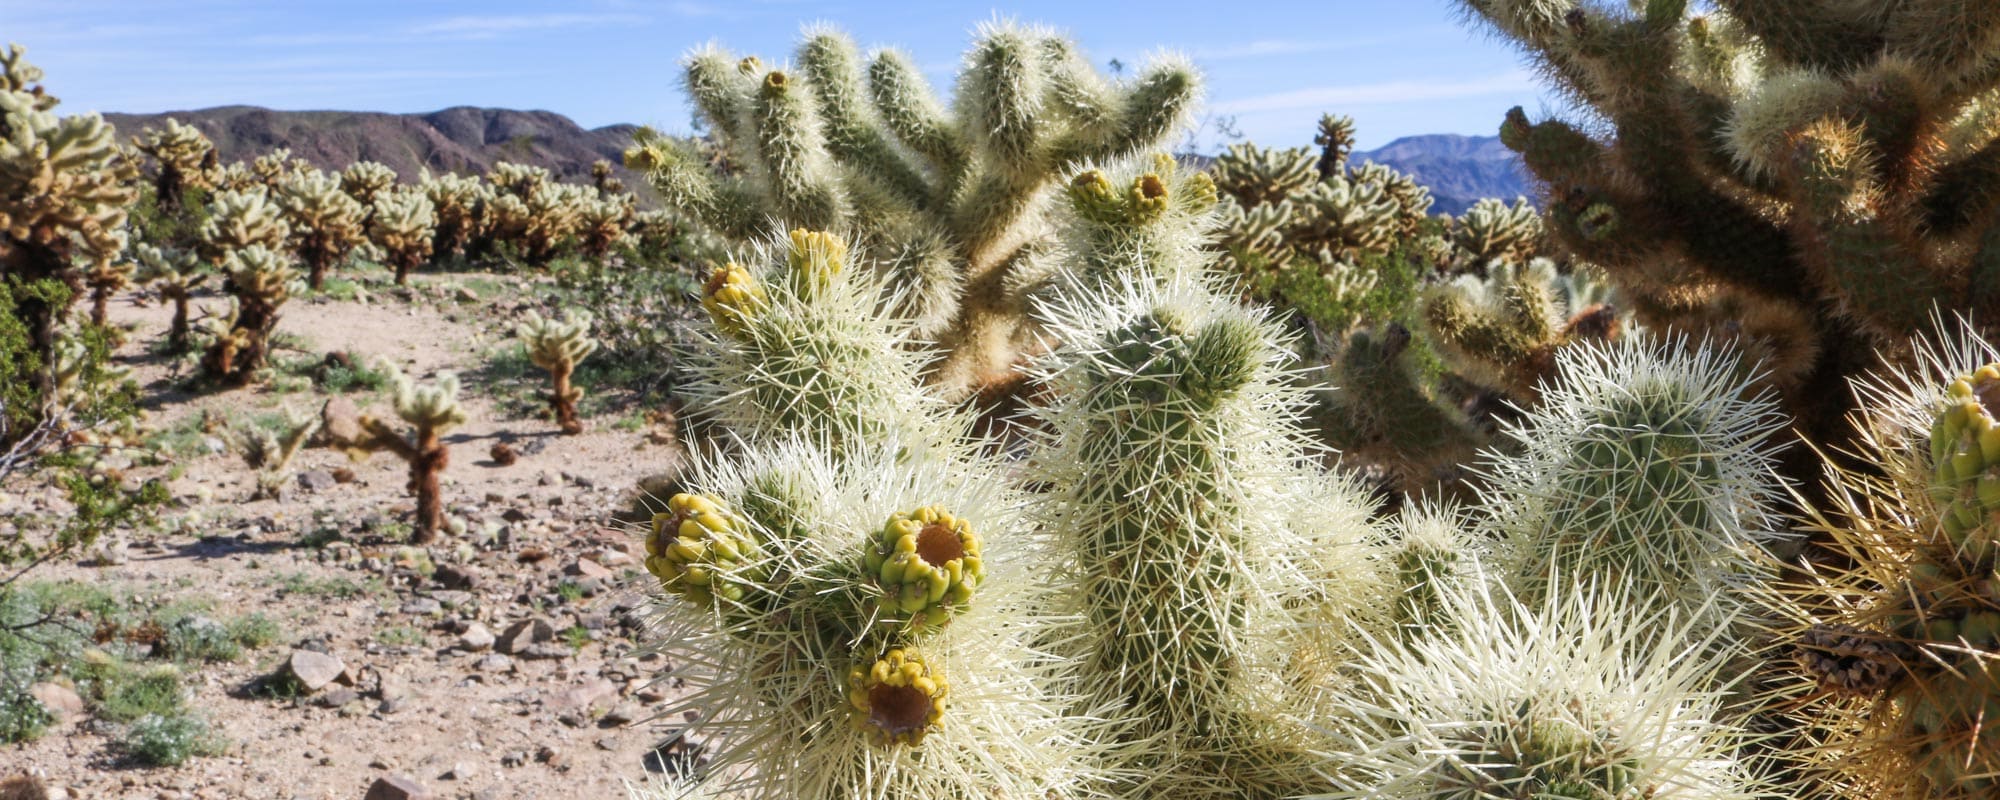 Joshua Tree National Park - Banner Cholla Cactus